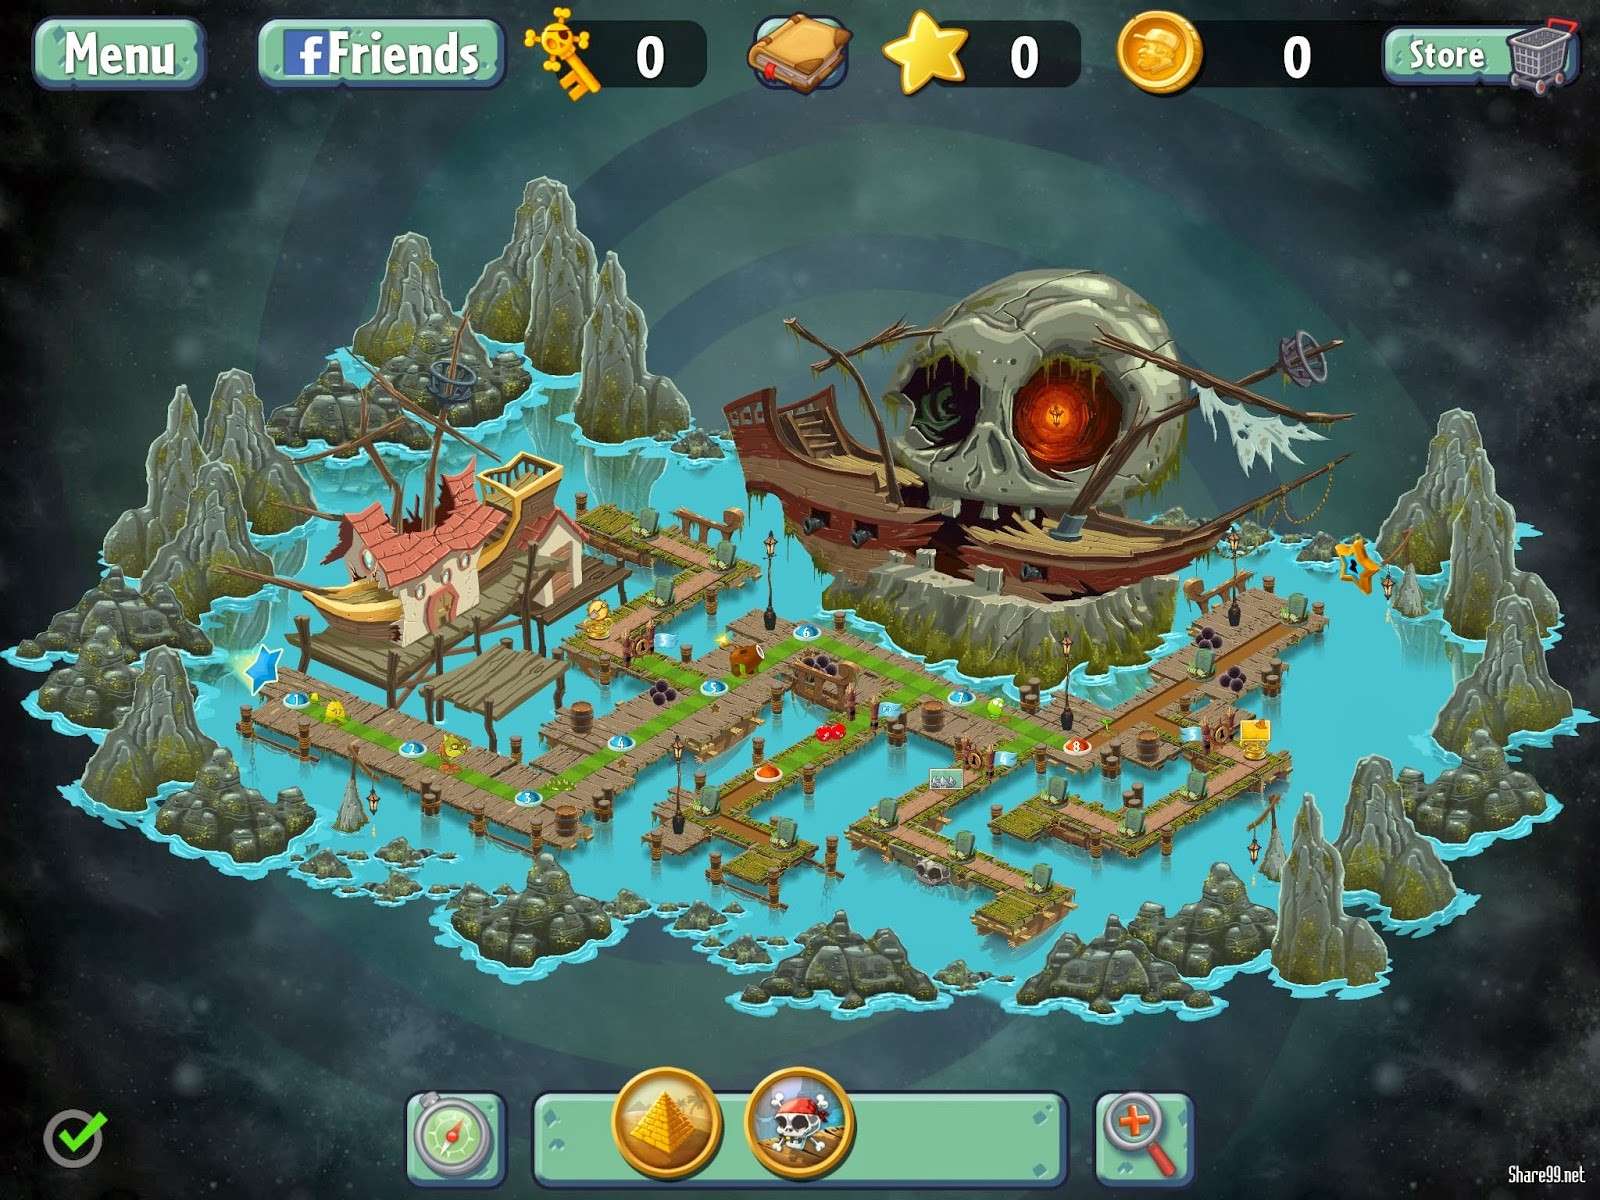 Download Plants vs Zombies 2 Full Free cho PC, Andoid, iOS mới nhất 2014 Dienda28